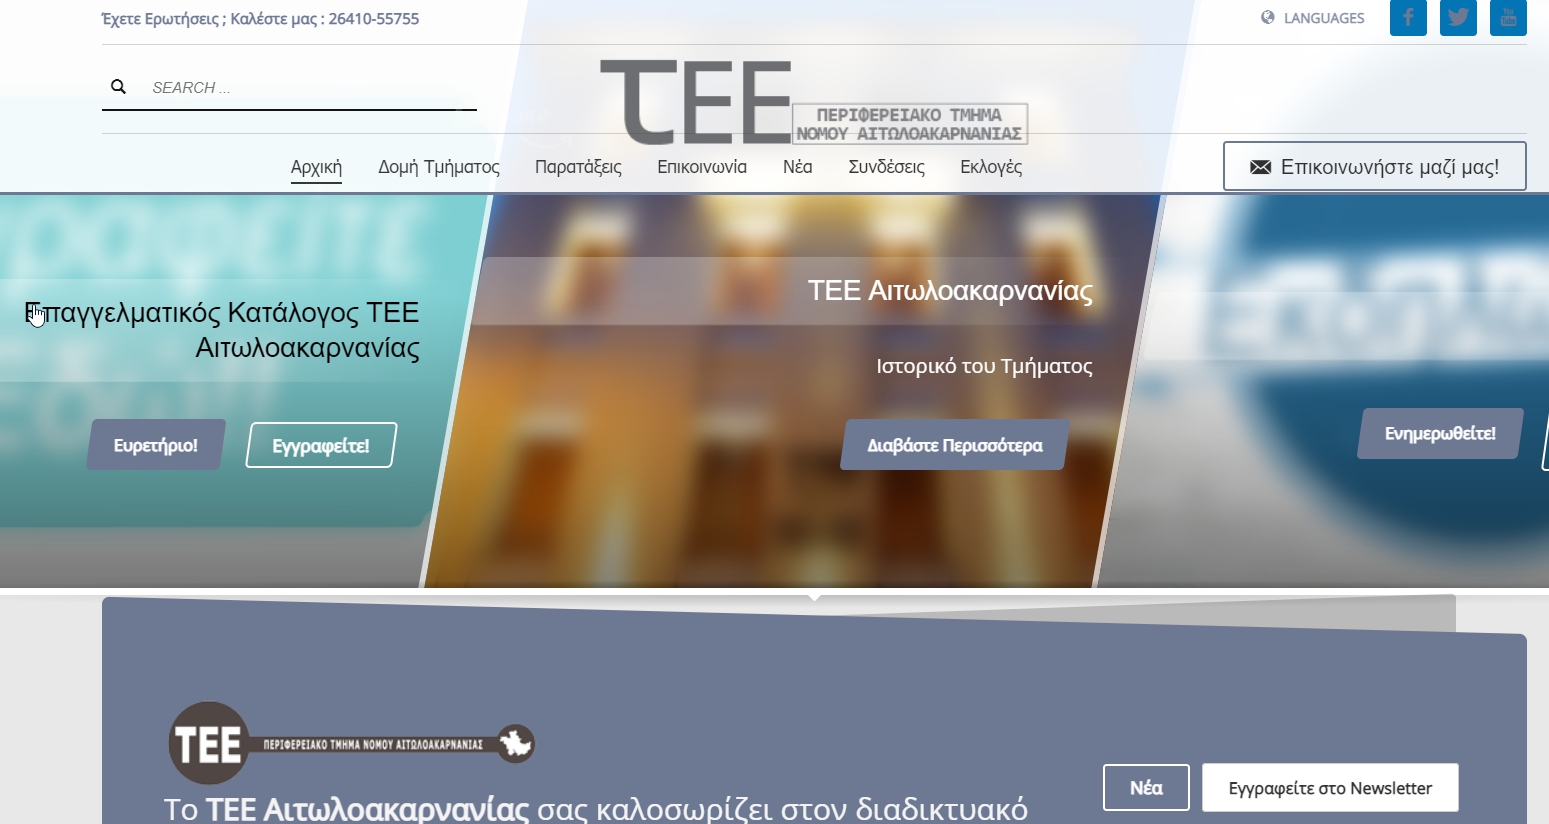 More information about "Webinar του ΤΕΕ Αιτωλοακαρνανίας για το "Εξοικονομώ-Αυτονομώ""